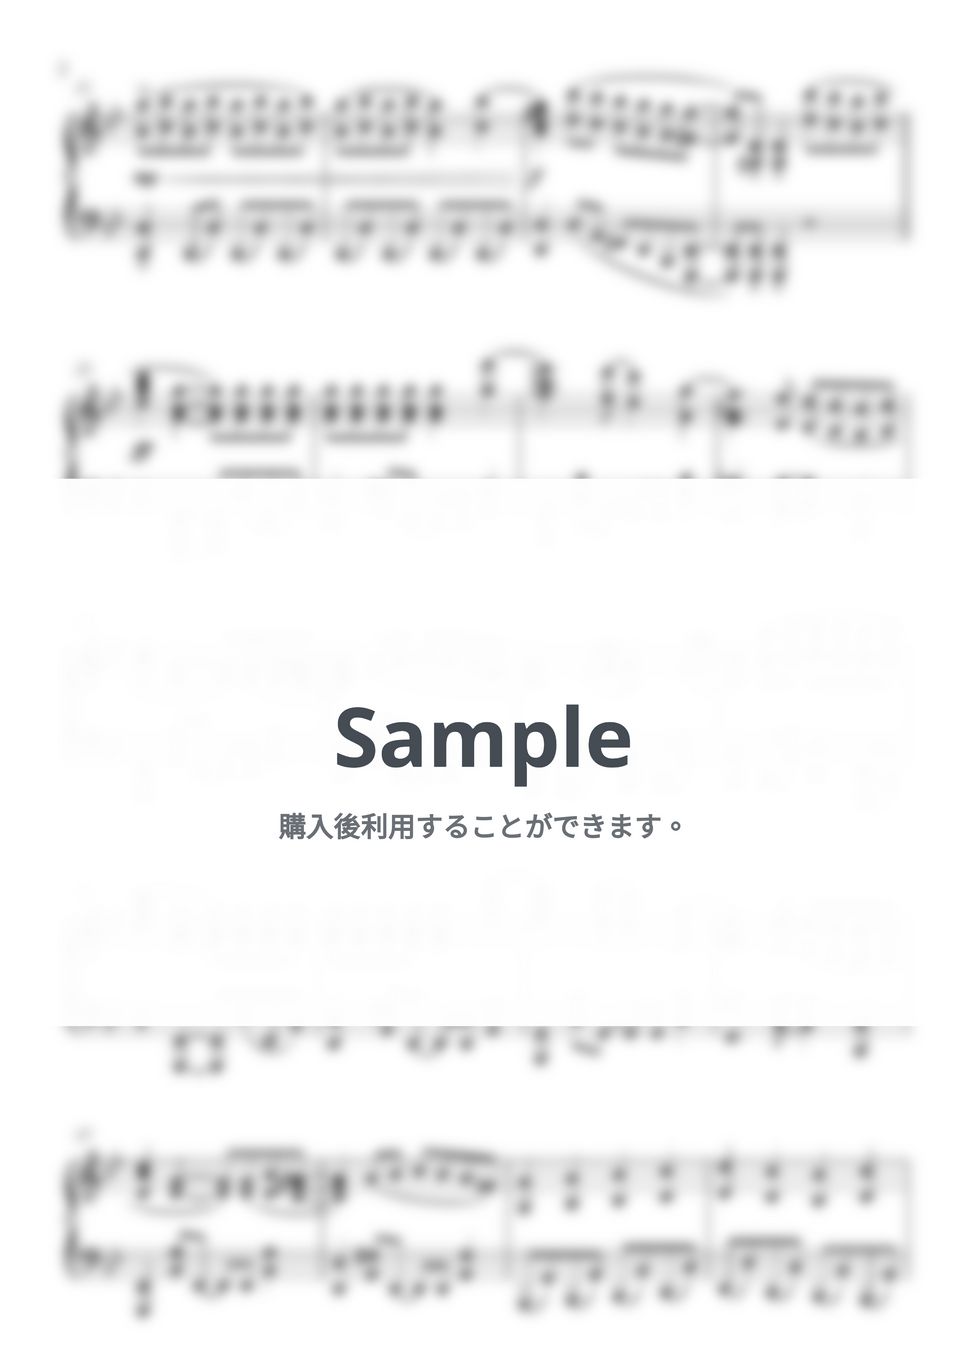 GUMI×初音ミク, Kanaria - アイデンティティ (ピアノ) by Rexa - Pianimusic